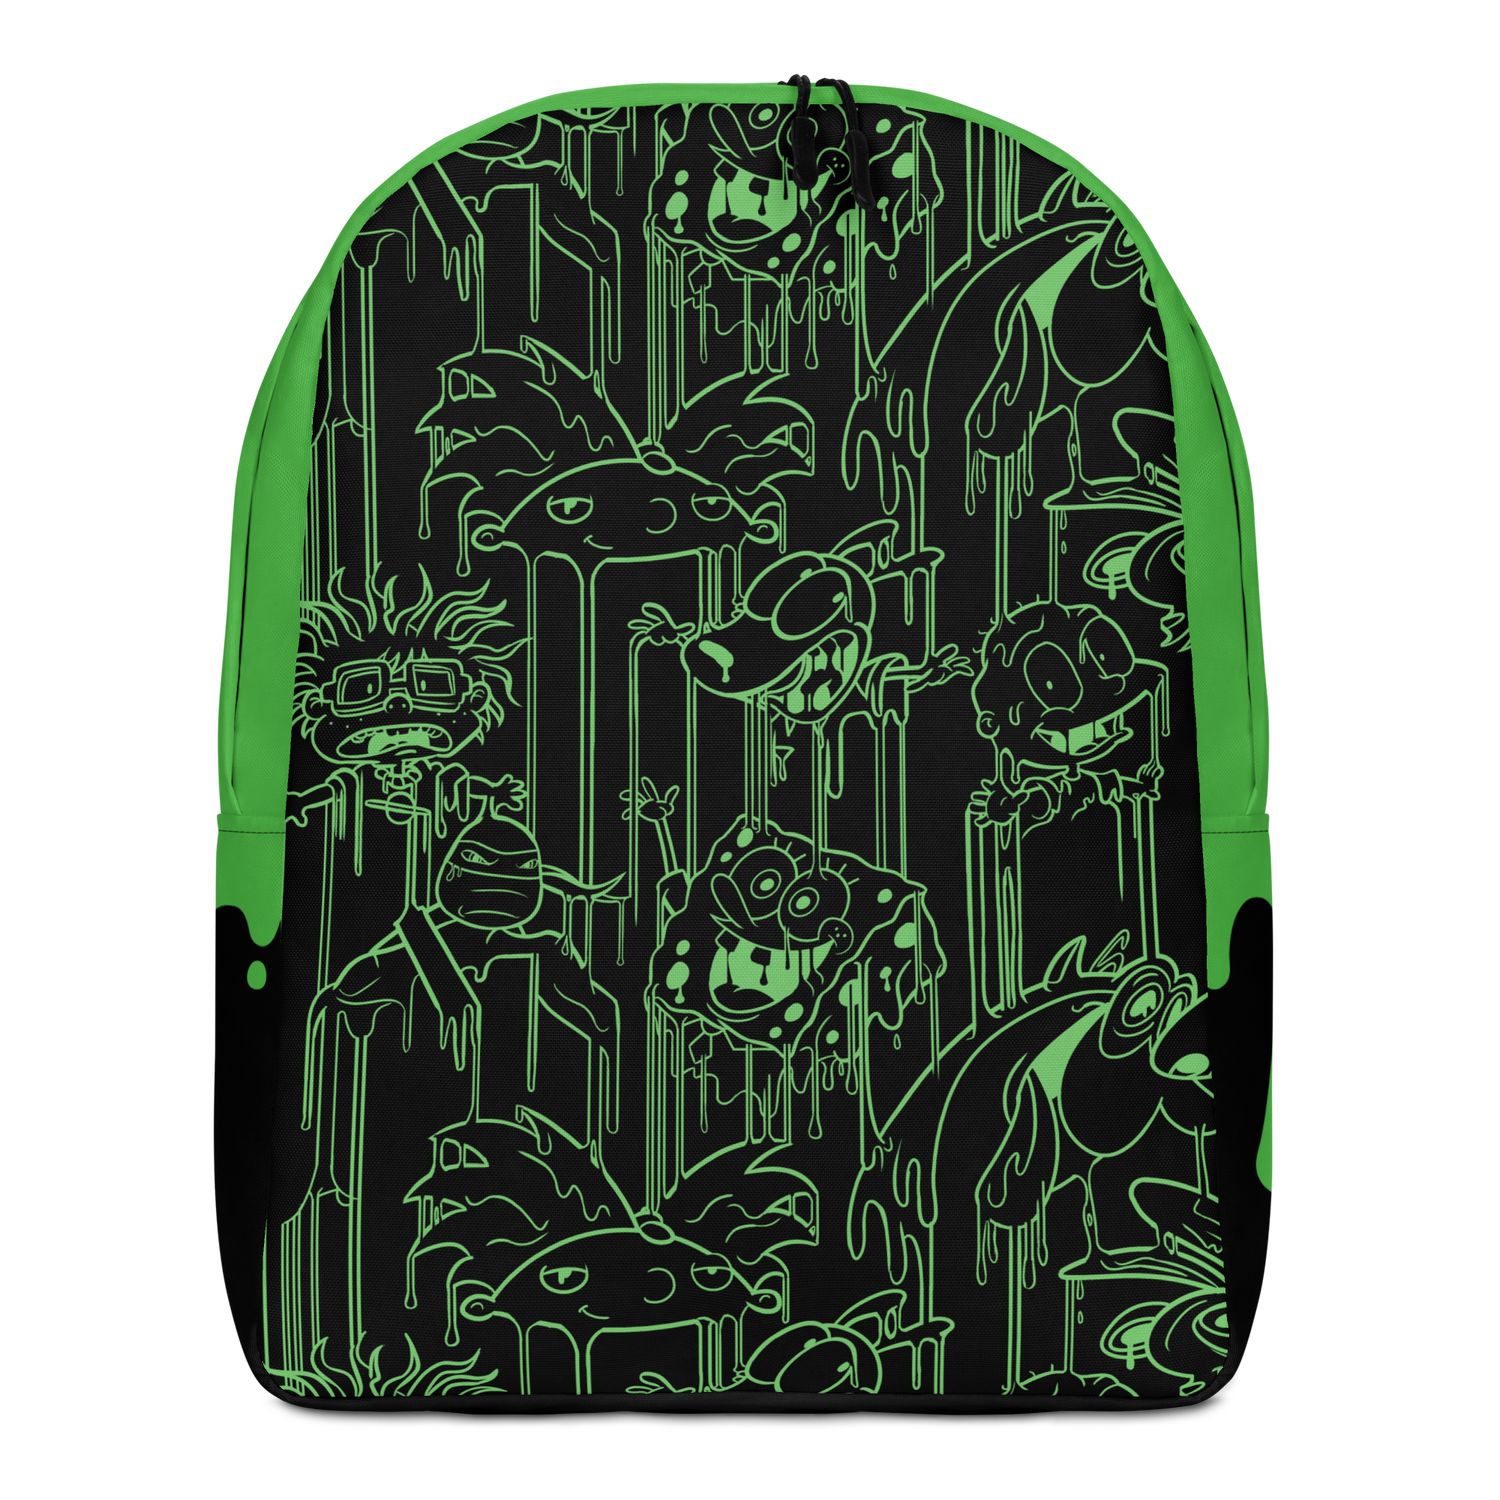 Slime Character Drip Minimalist Backpack